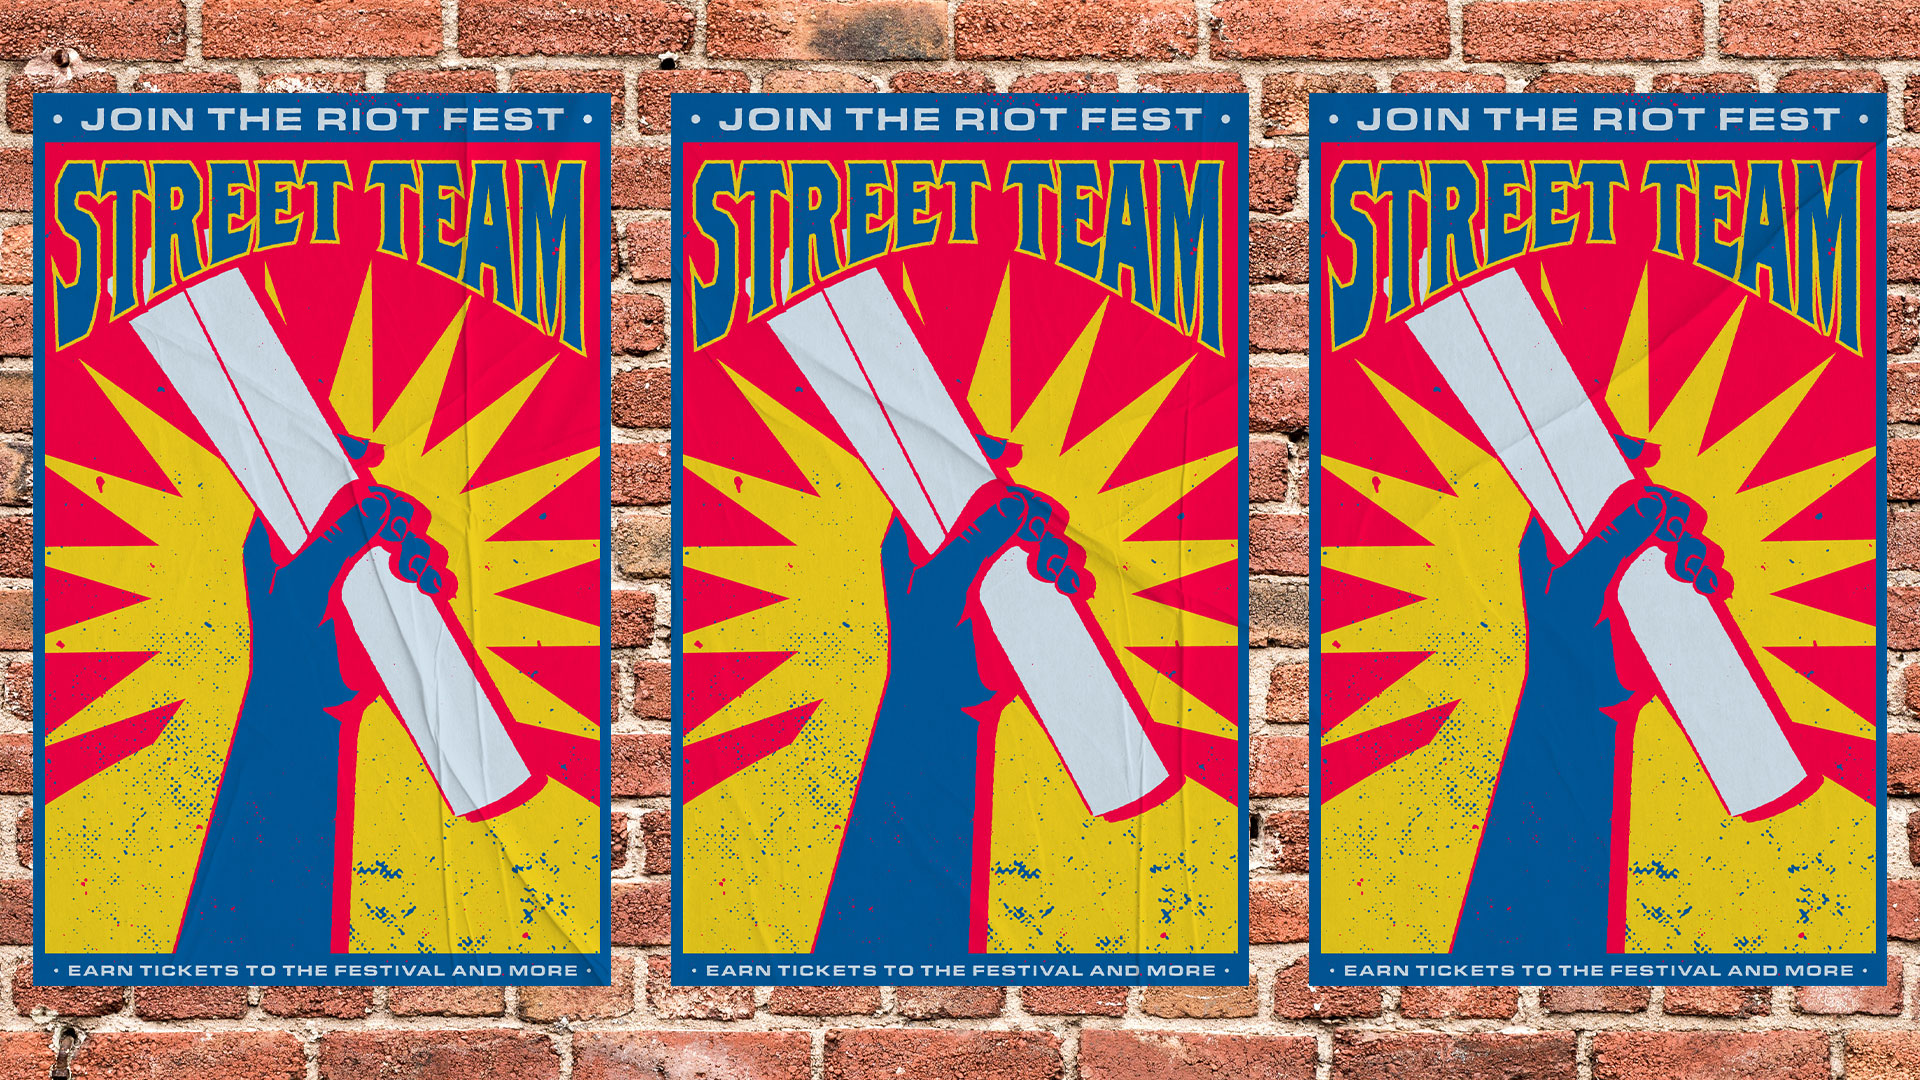 Join the Riot Fest Street Team